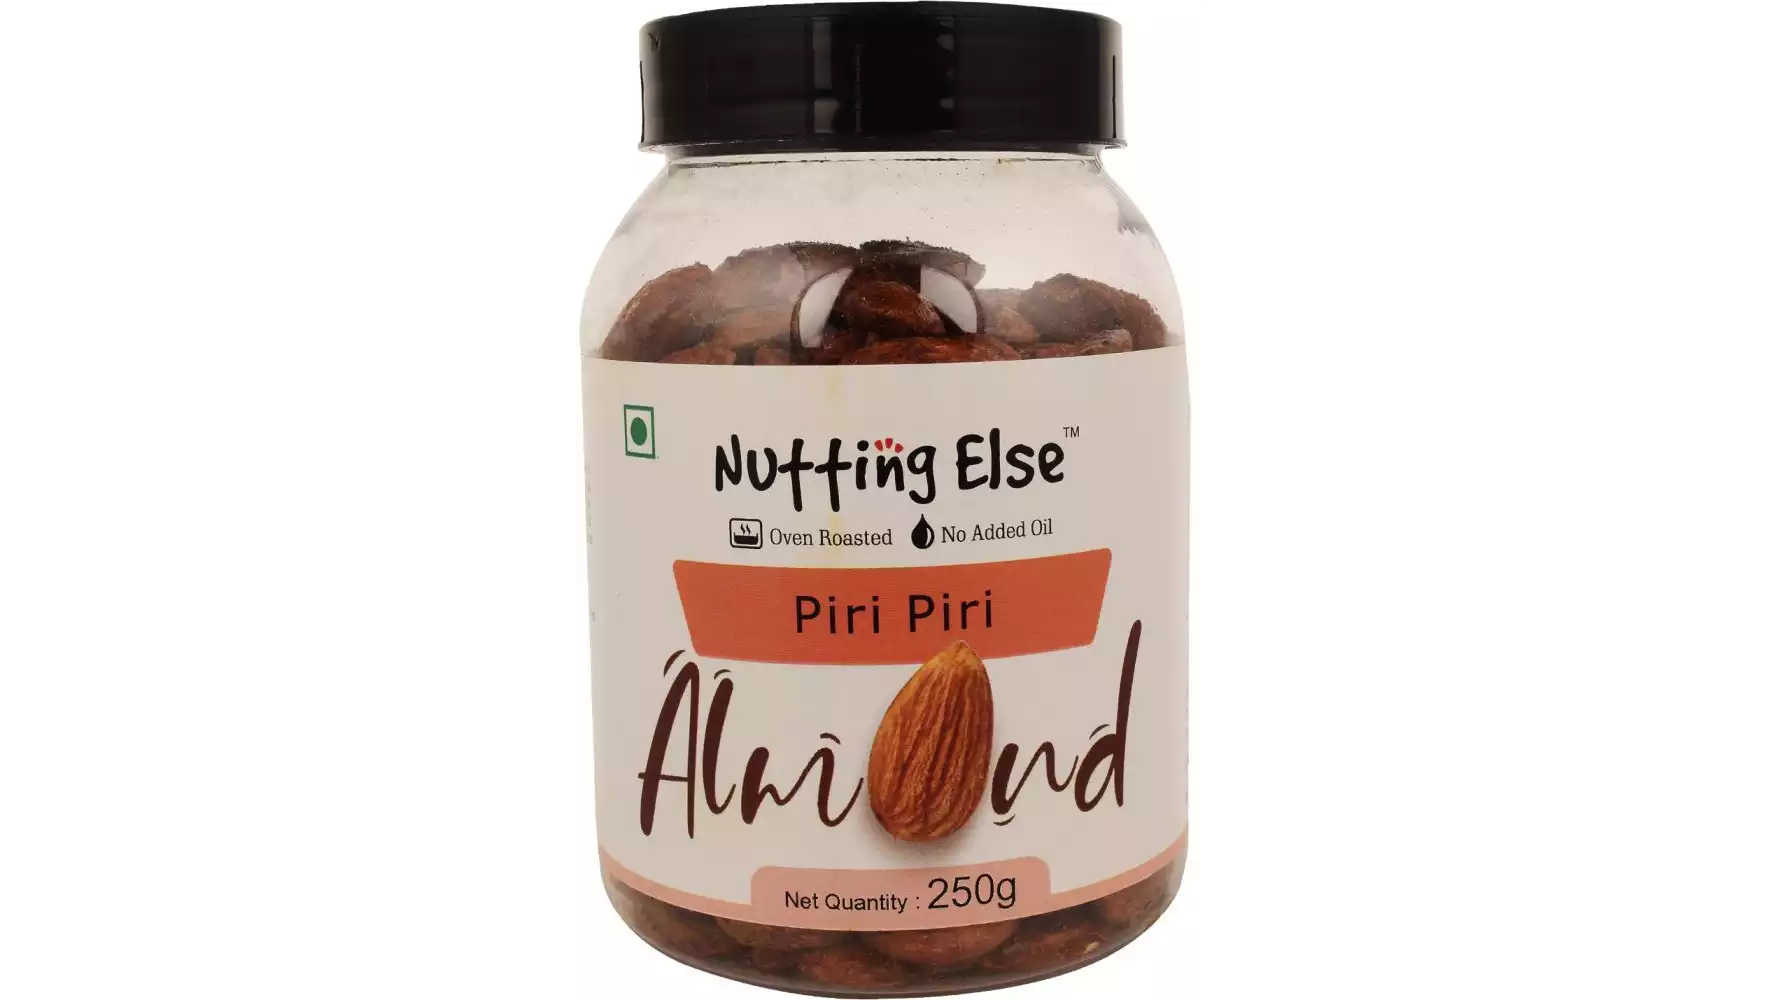 Nutting Else Piri Piri Almond (250g)